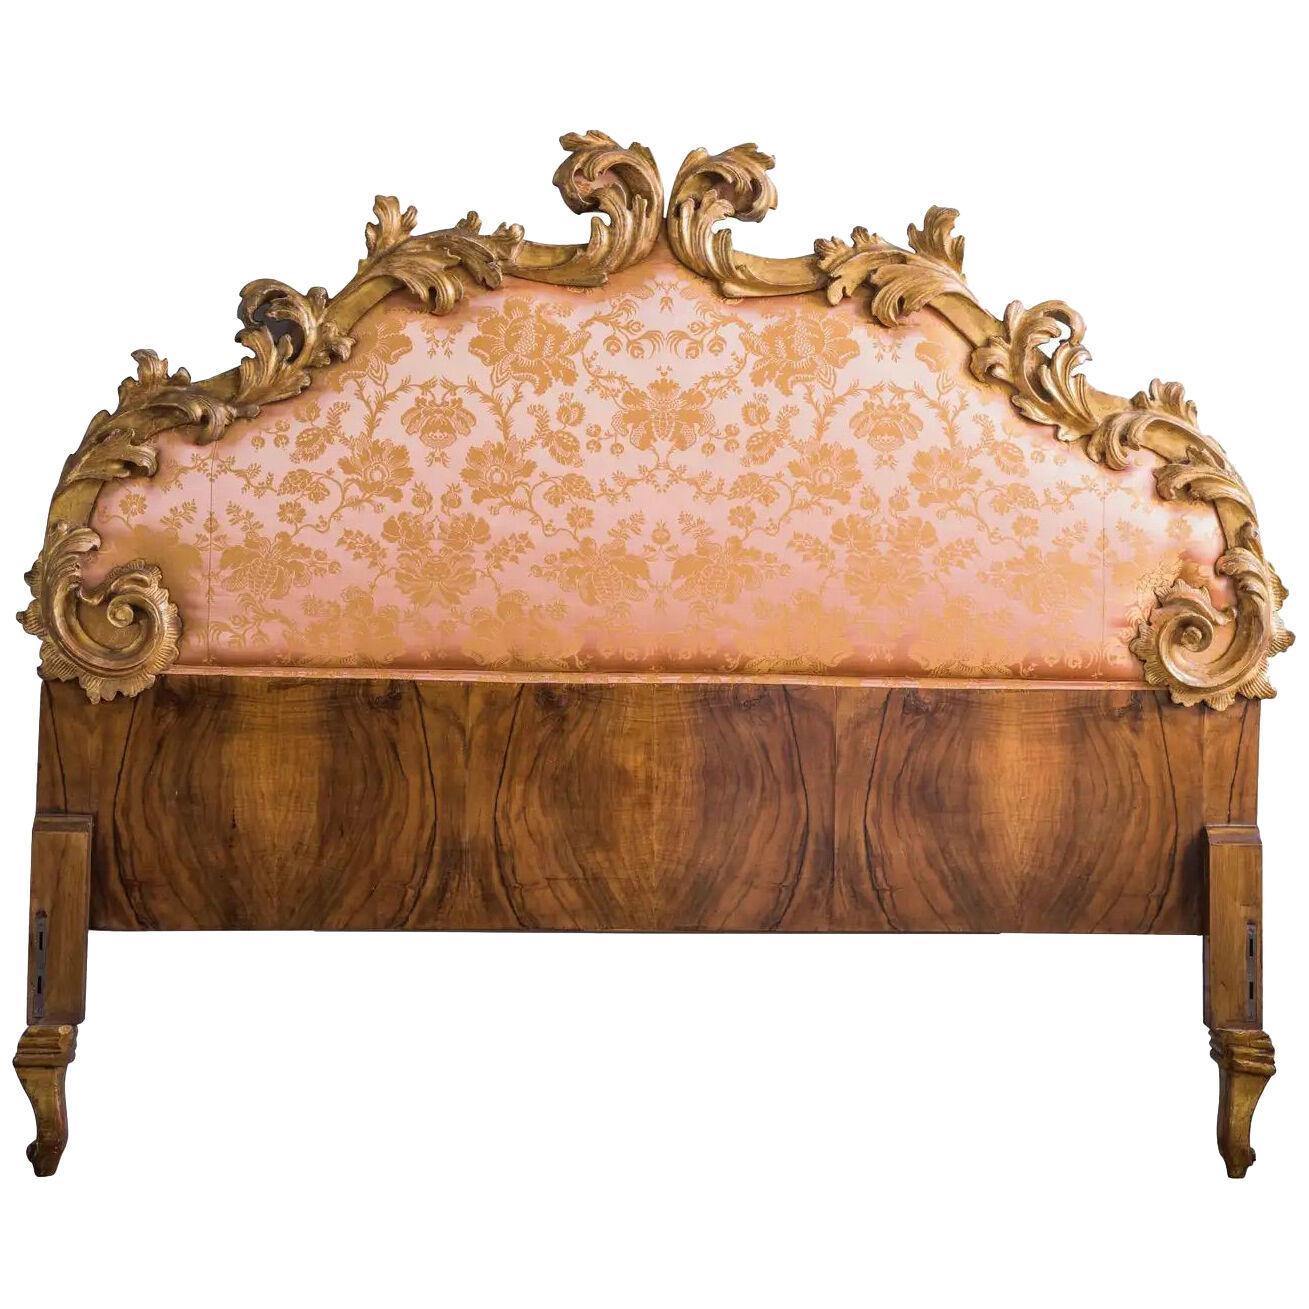 19th C. Italian Rococo Style Giltwood Headboard Upholstered in Tassinari Damask